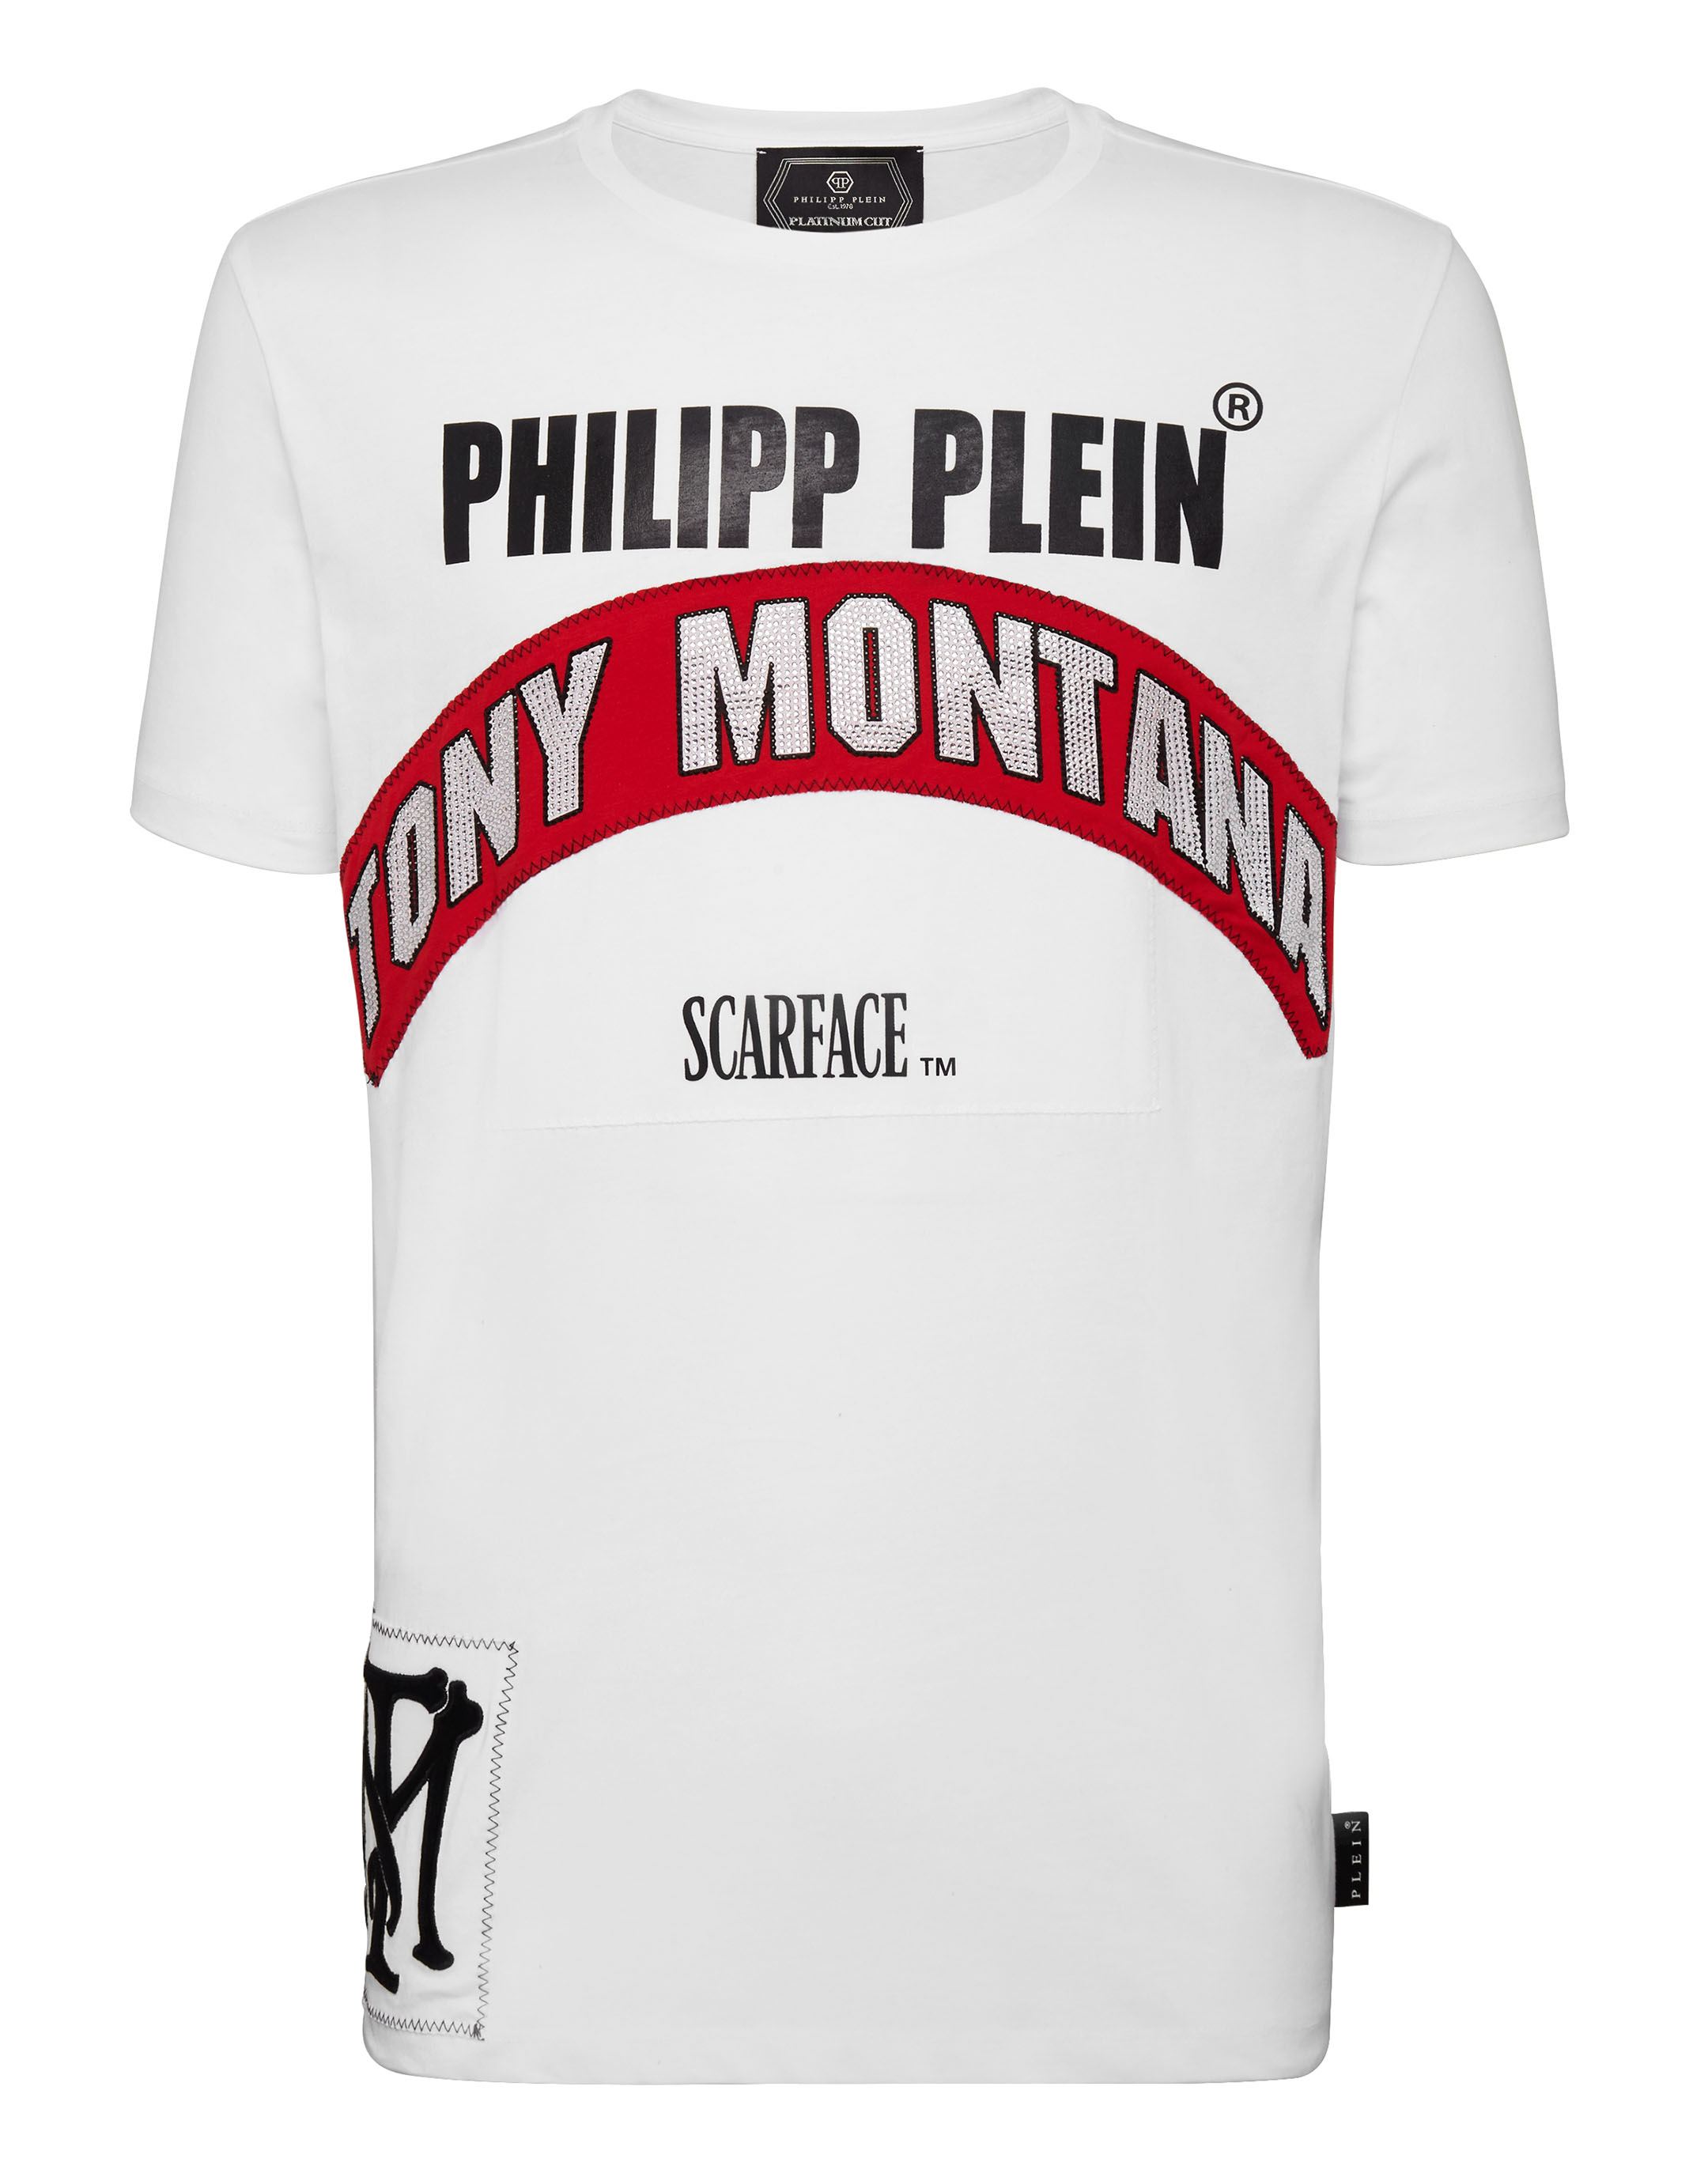 philipp plein t shirt tony montana